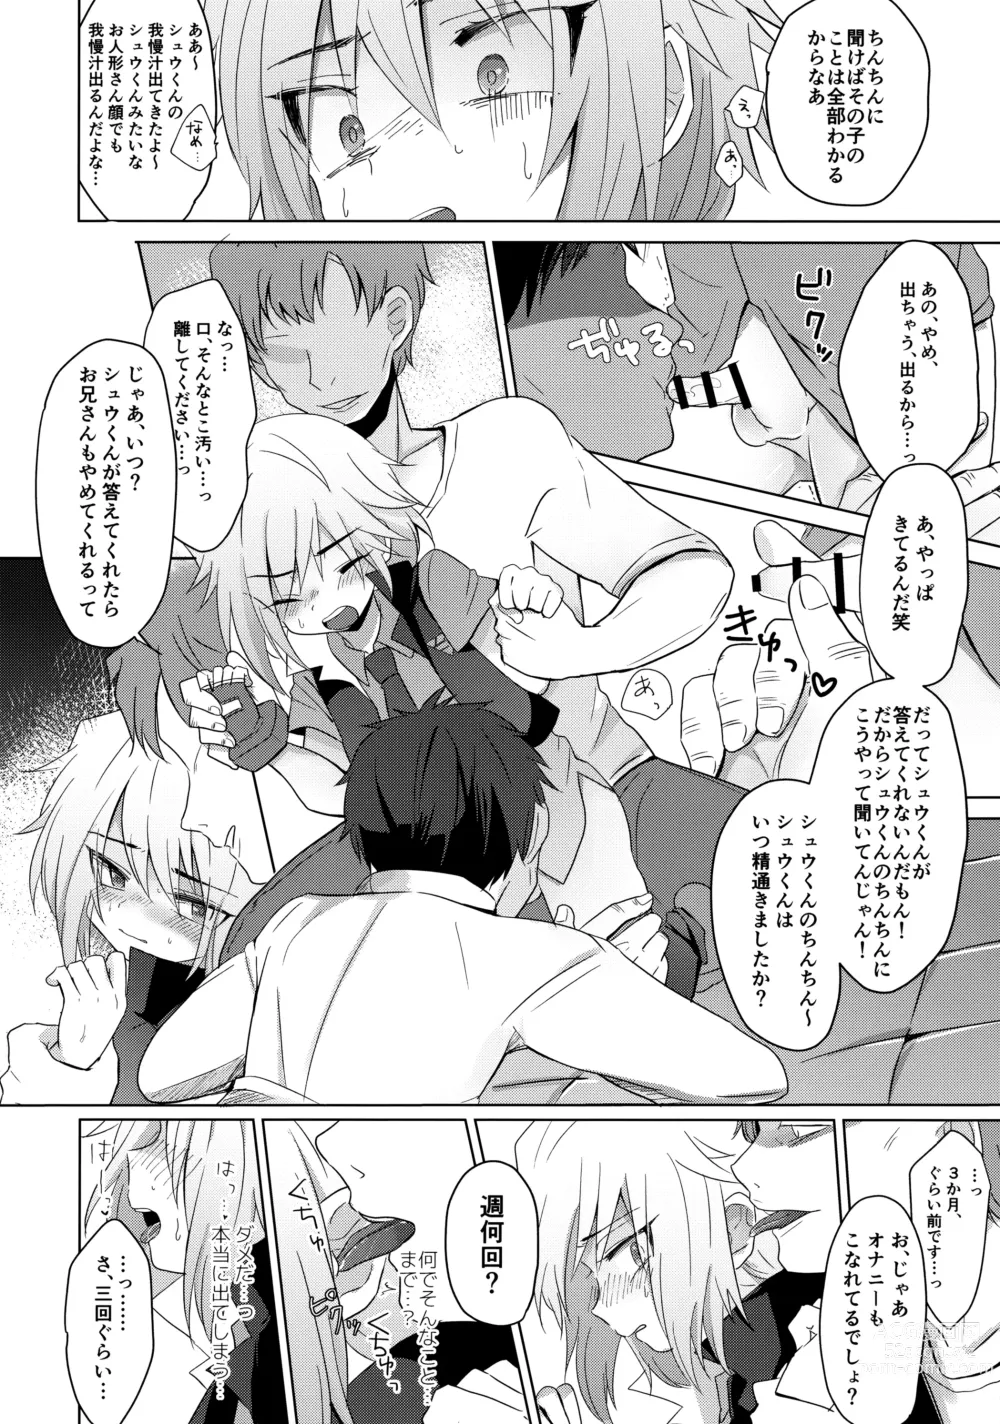 Page 13 of doujinshi Hakoniwa Therapy